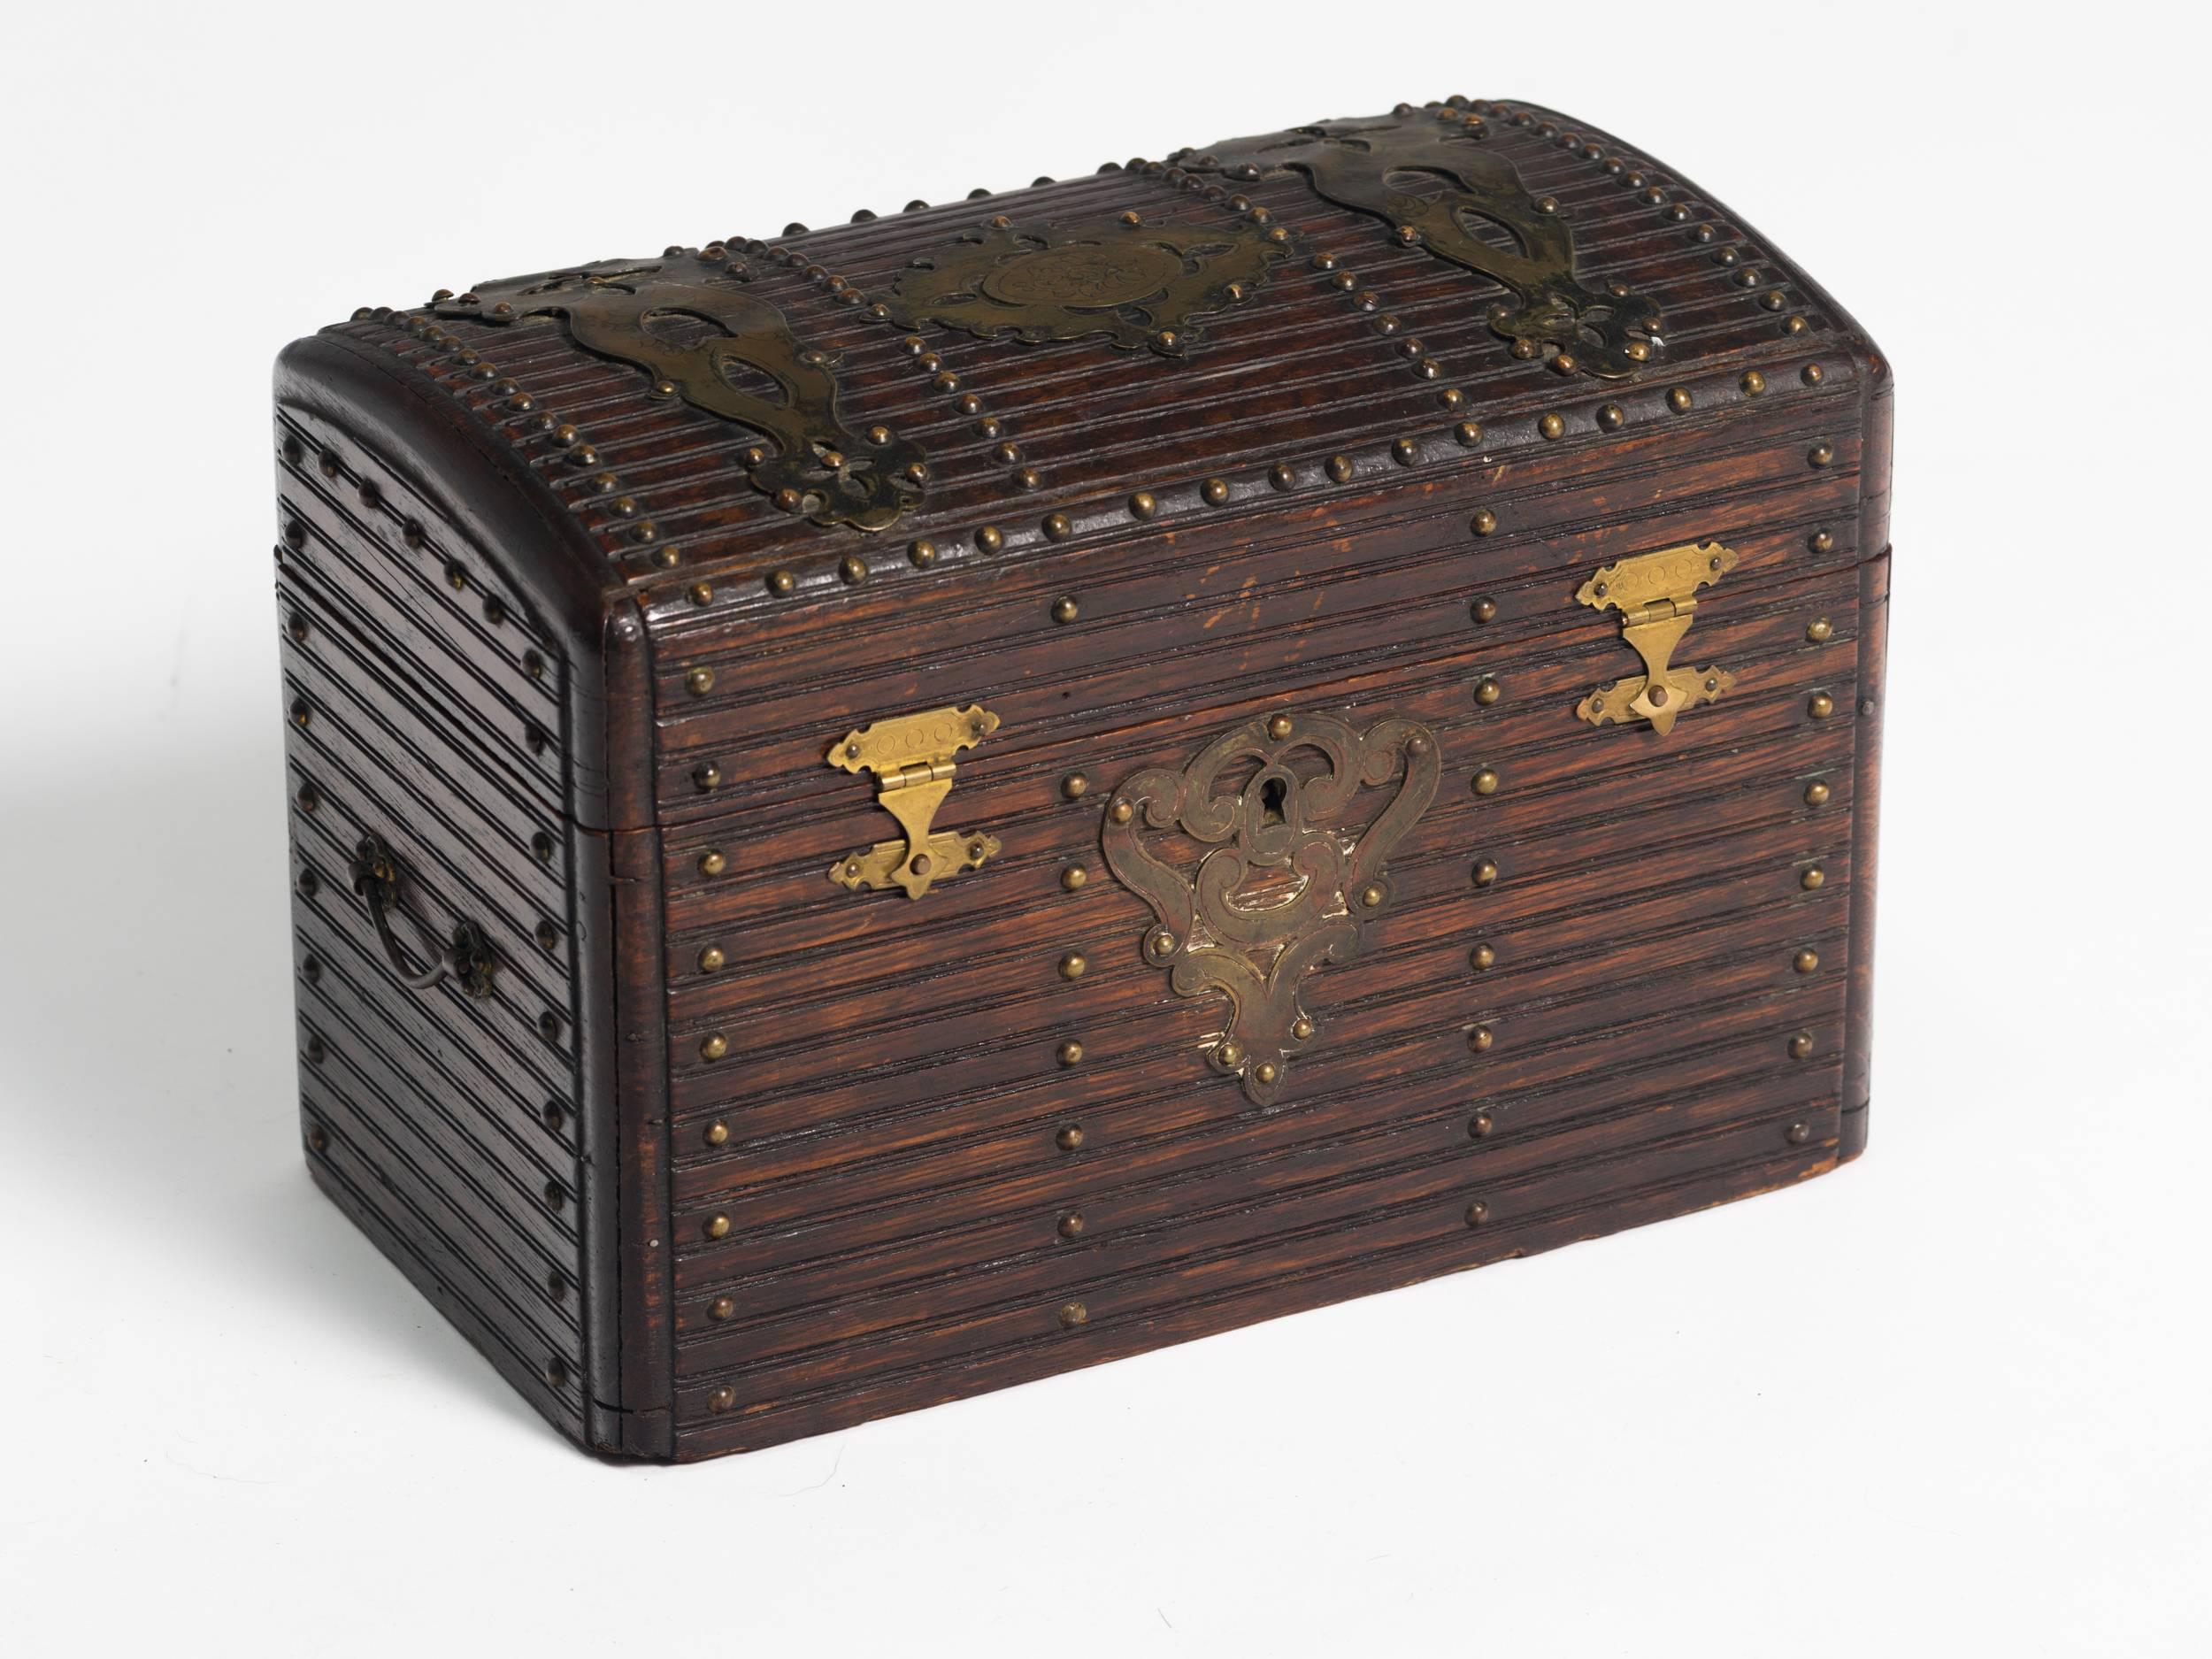 19th century wood and brass box.